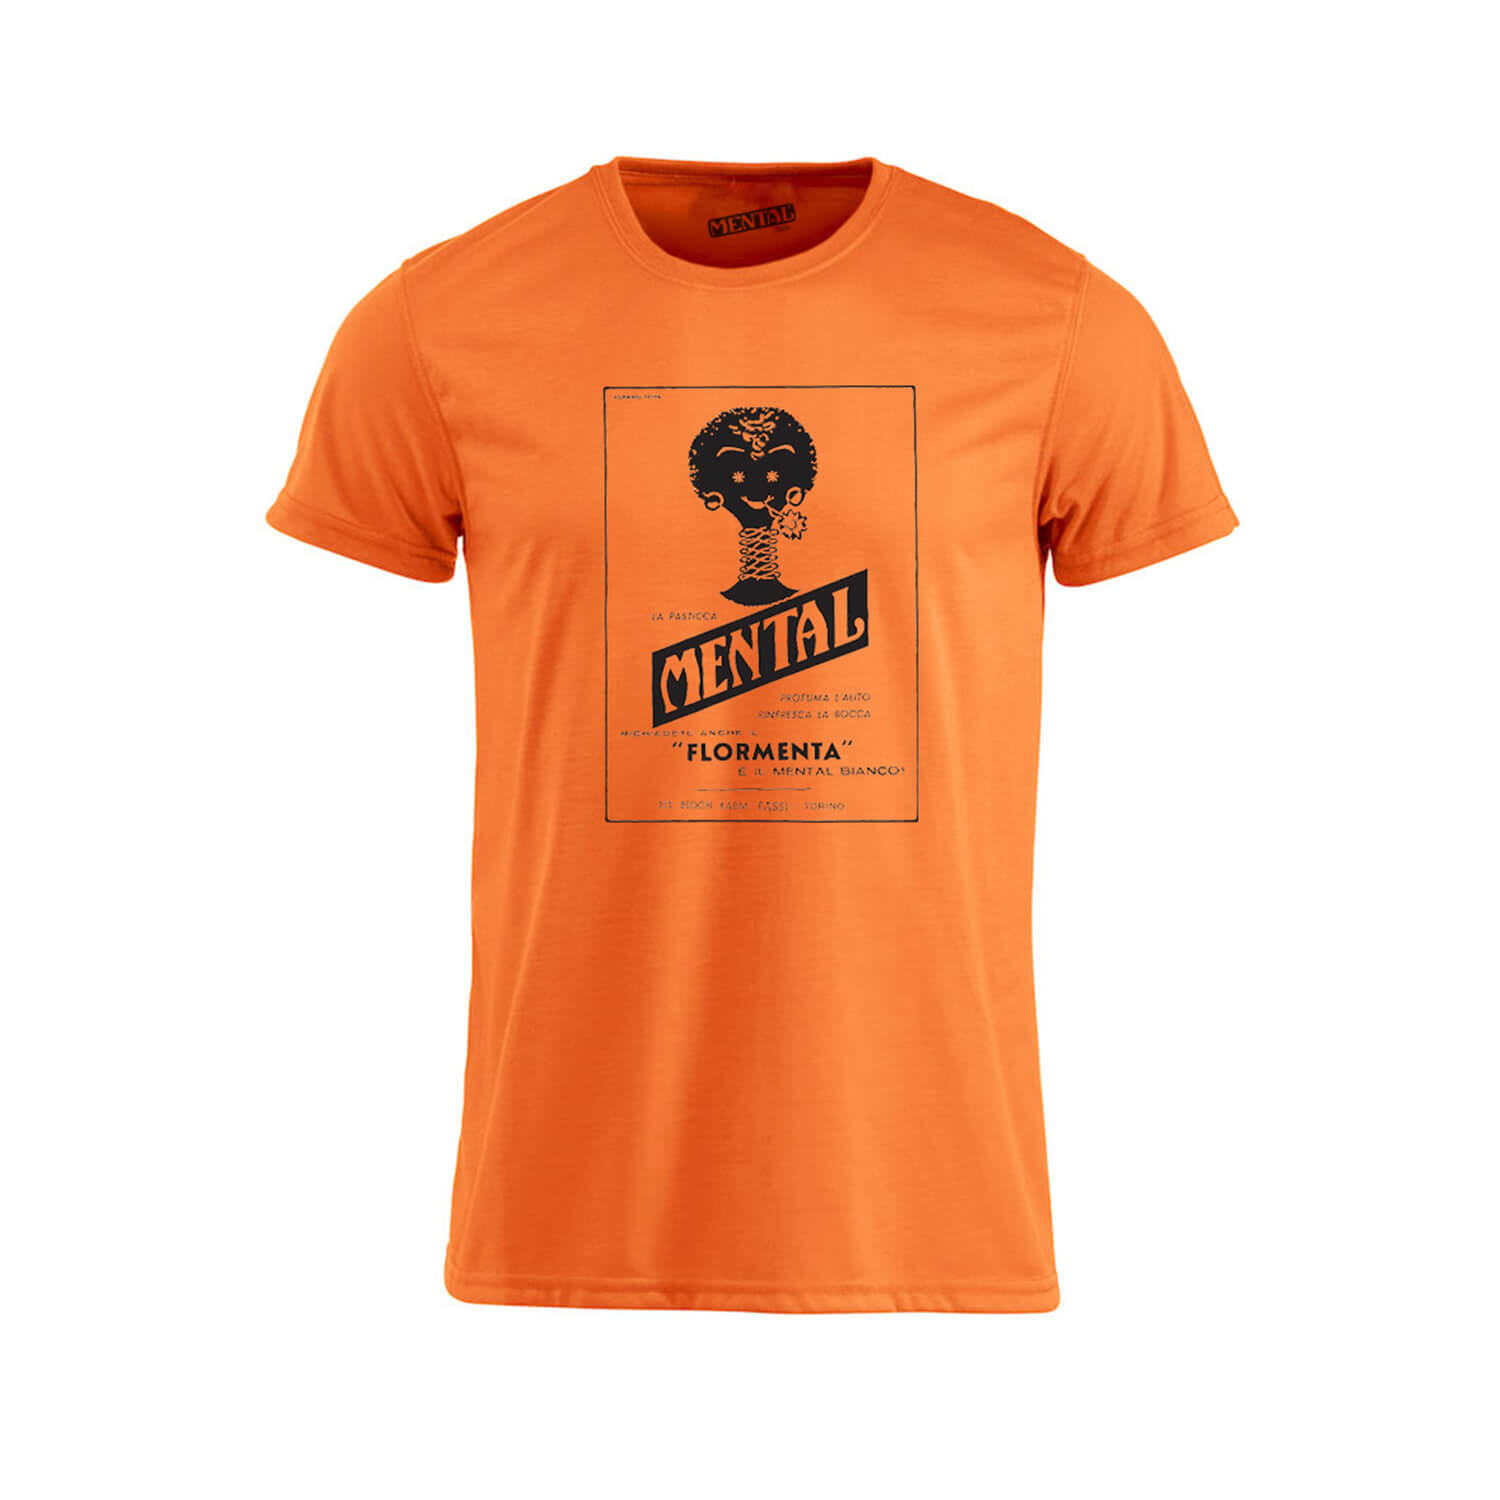 T-shirt orange Vintage Mental - size L - T-shirt